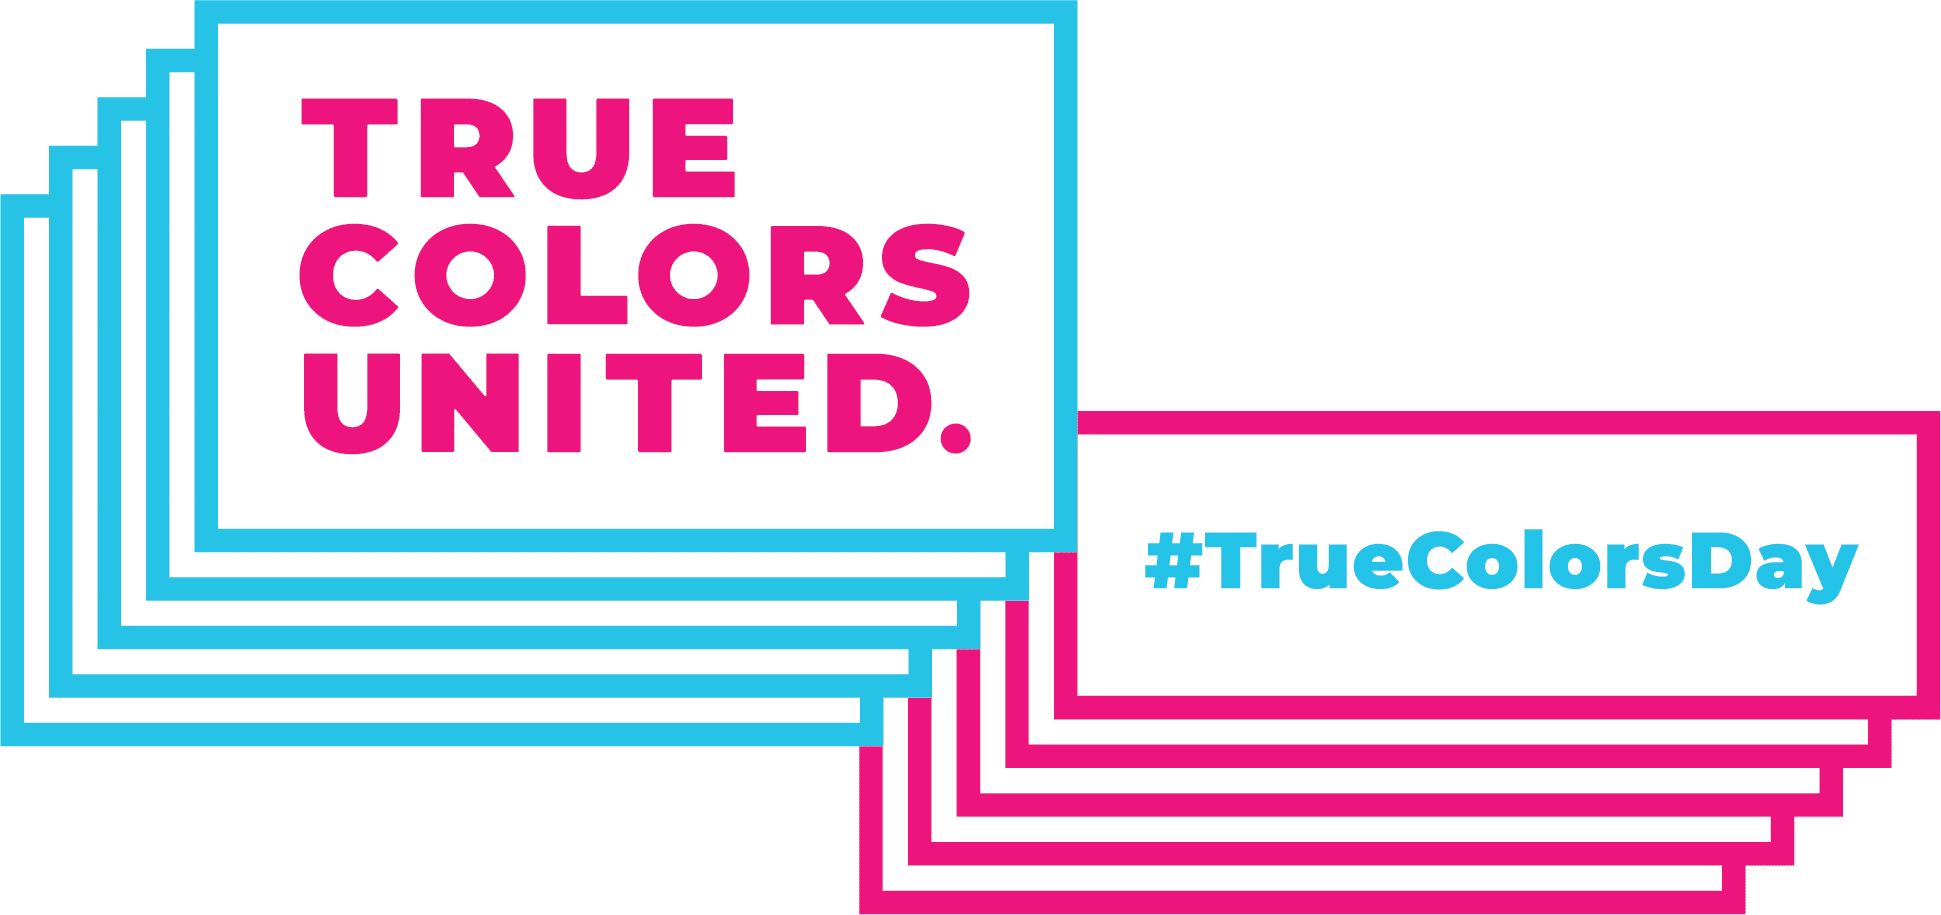 True Colors United #TrueColorsDay